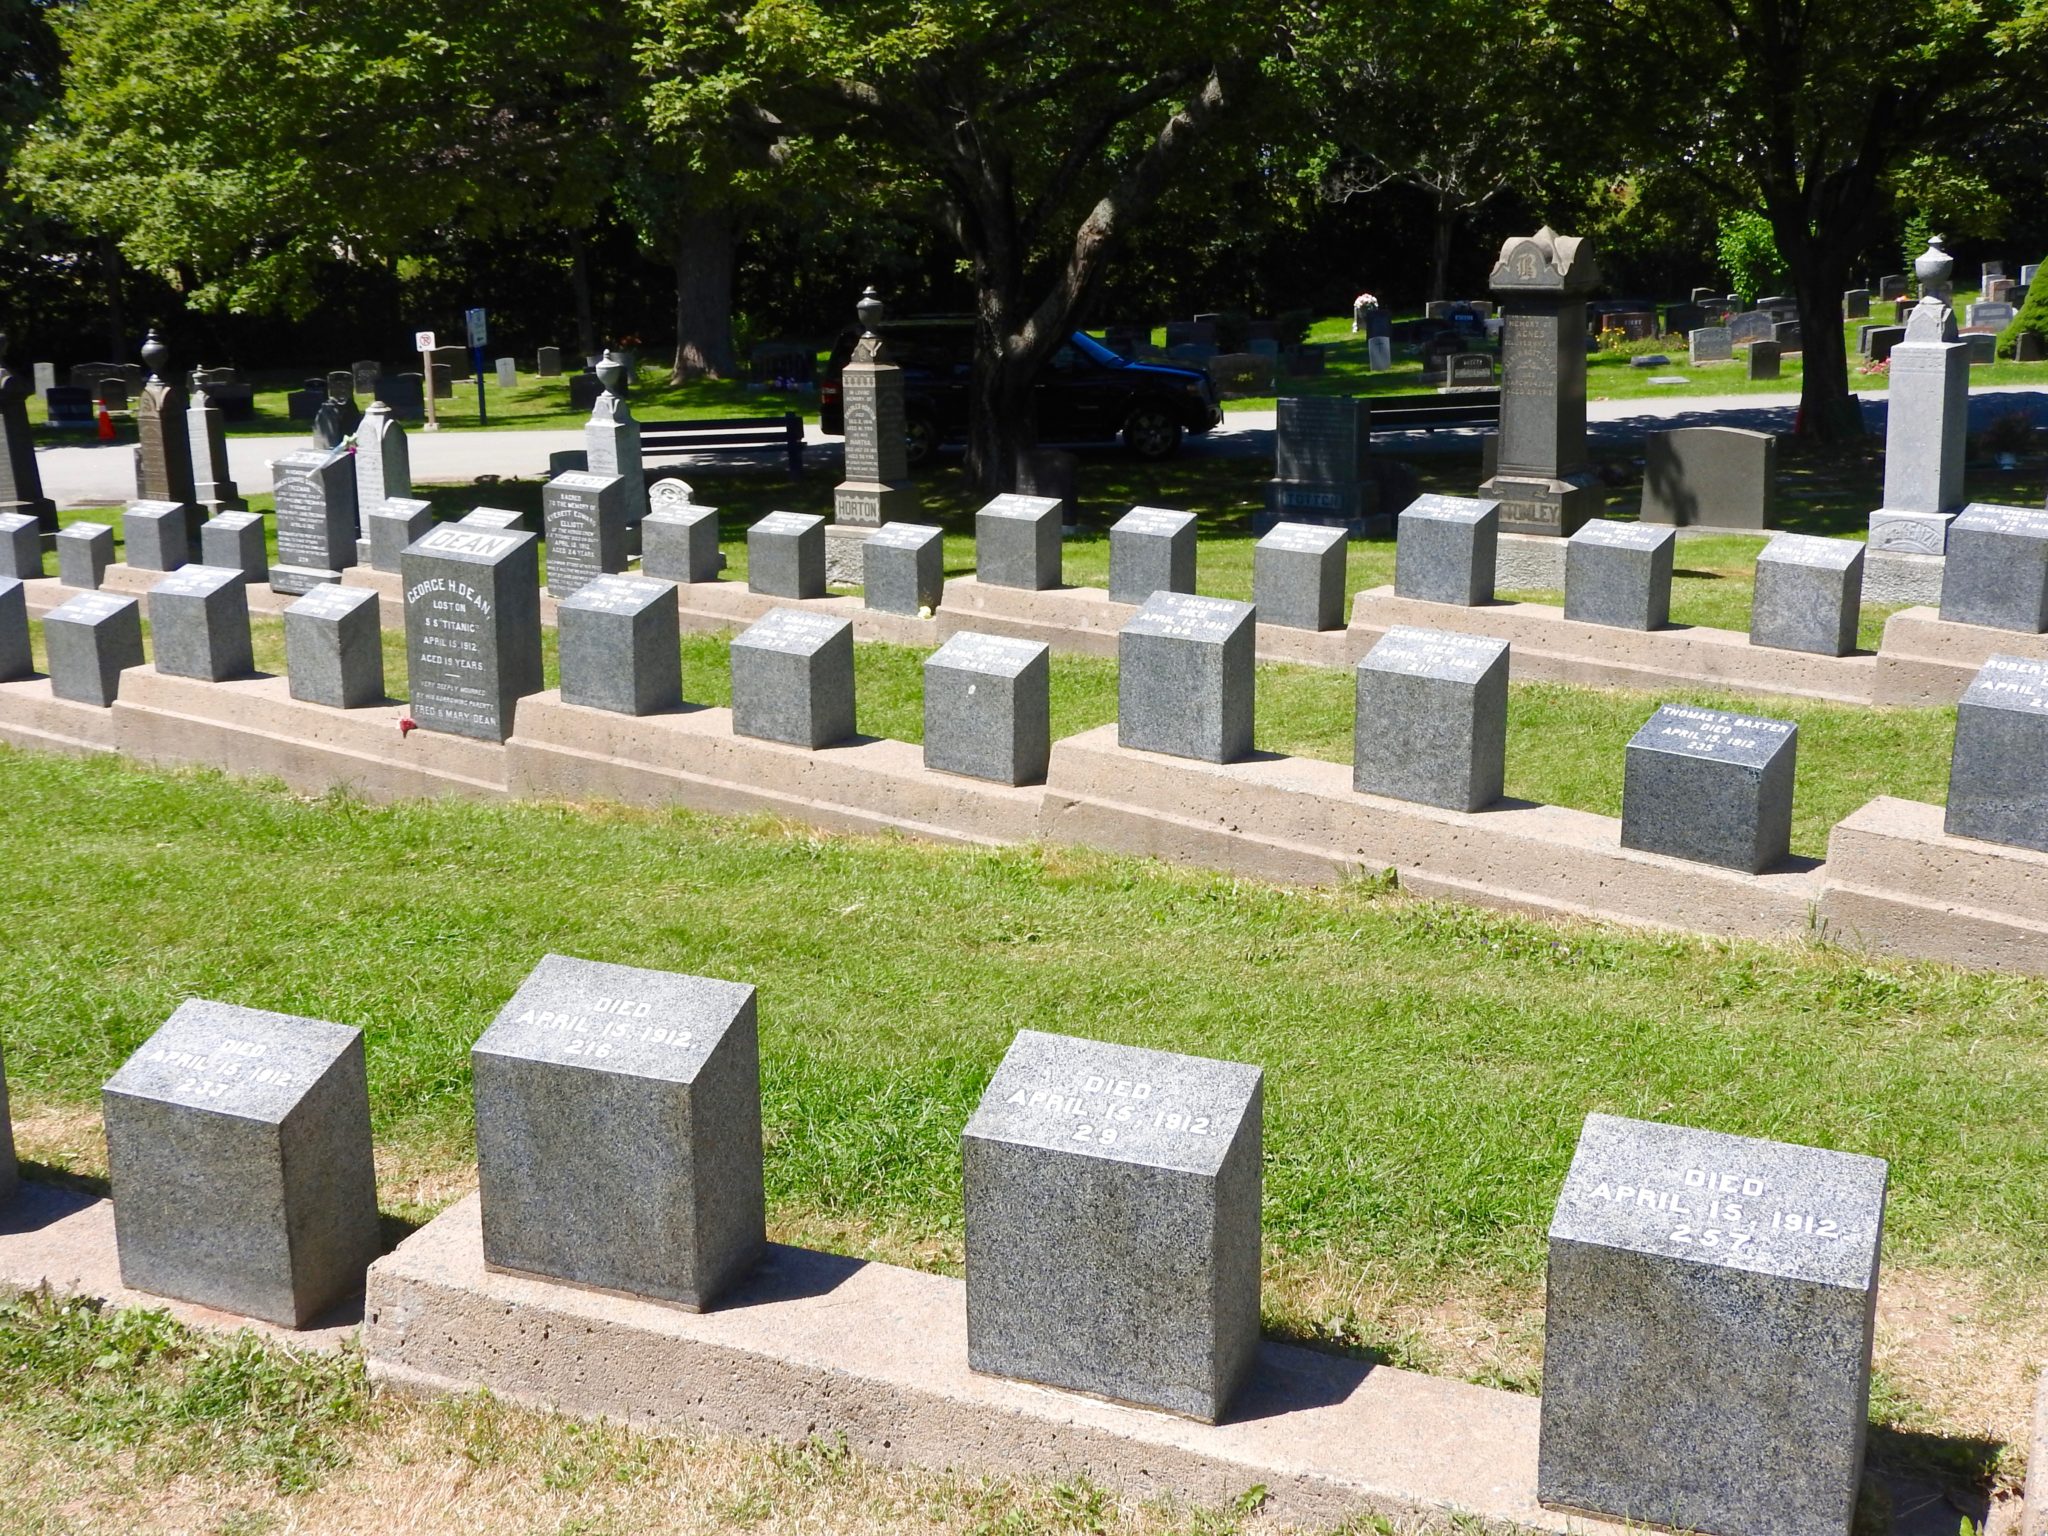 Three rows of granite headstones